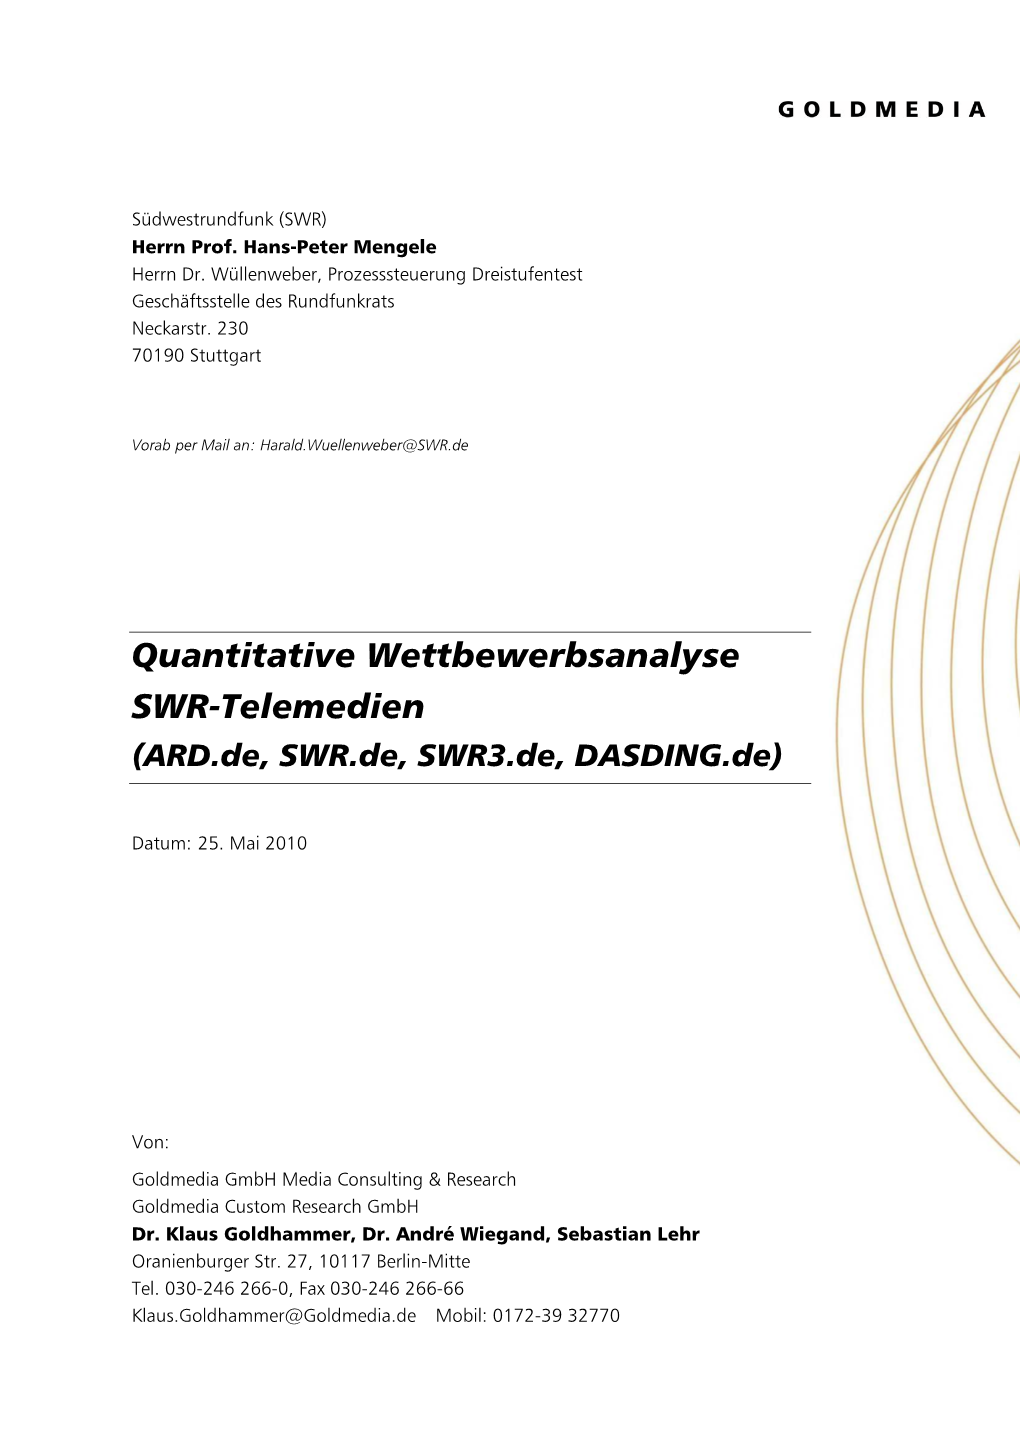 Quantitative Wettbewerbsanalyse SWR-Telemedien (ARD.De, SWR.De, SWR3.De, DASDING.De)